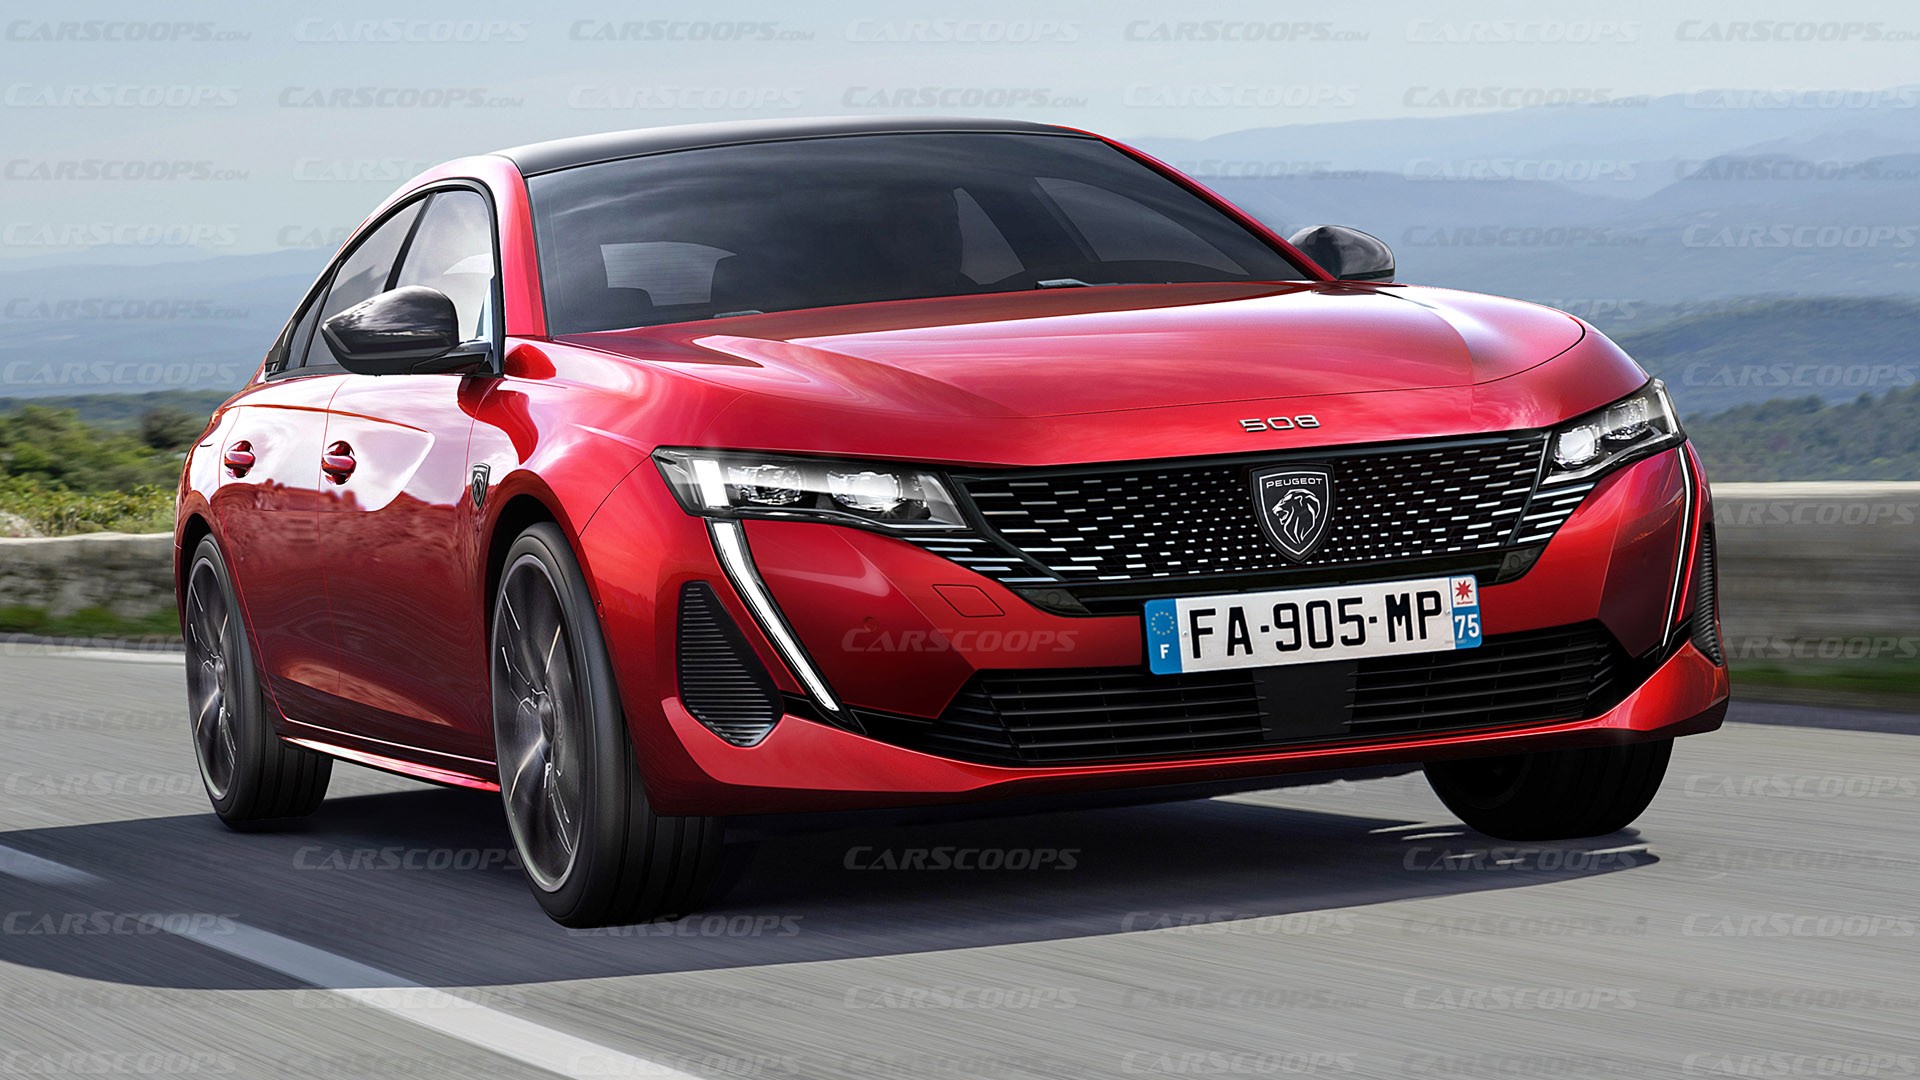 https://www.carscoops.com/wp-content/uploads/2021/12/Peugeot-508-Facelift-Rendering.jpg